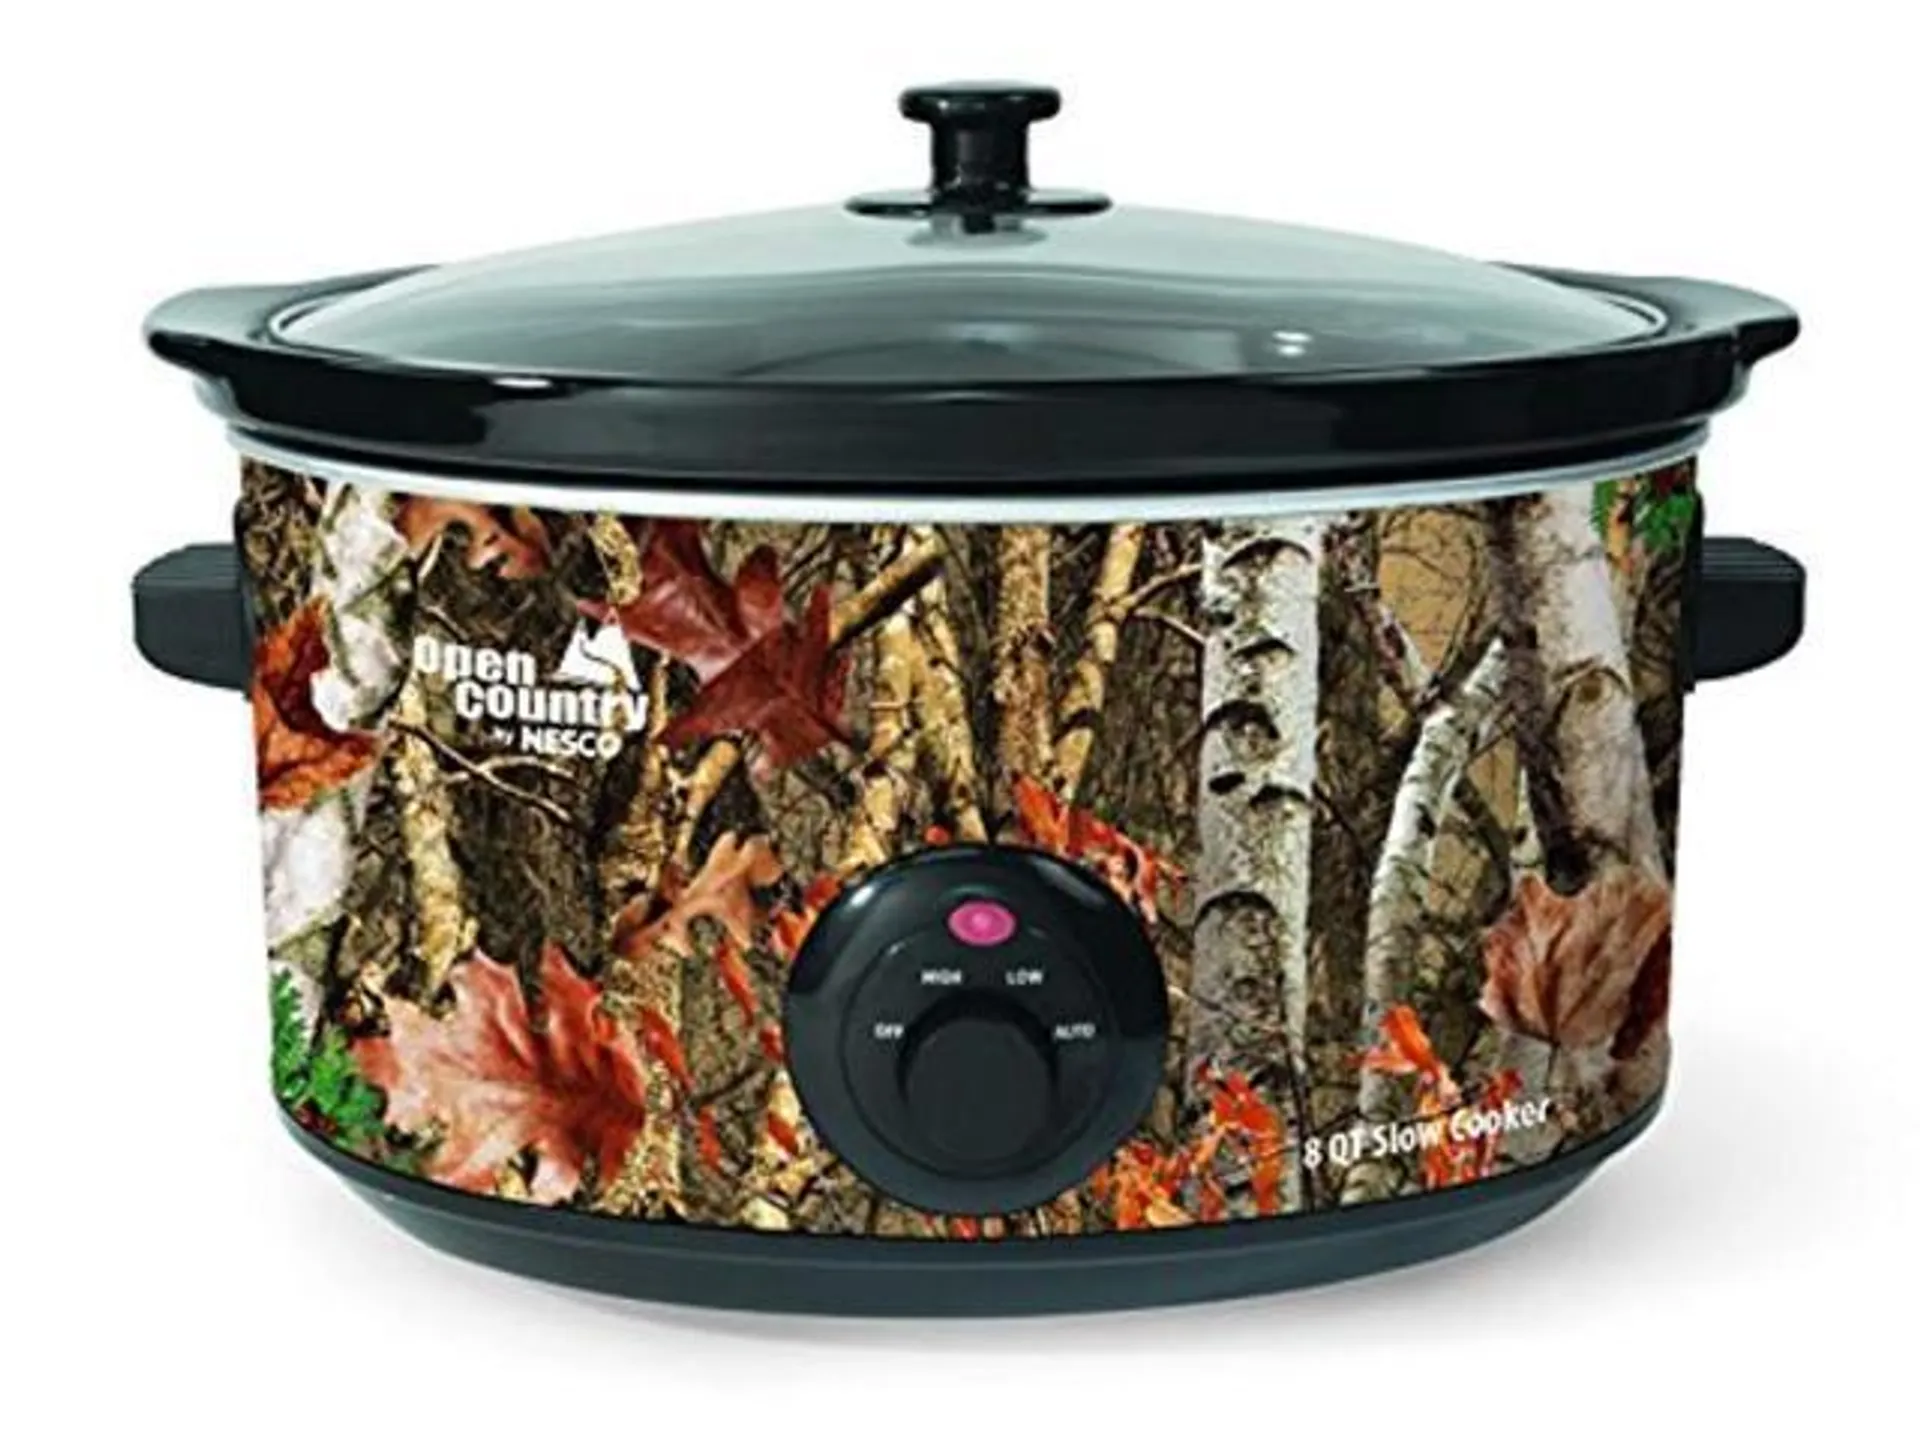 open country sc-8017 slow cooker, 8 quart, woodland birch camo